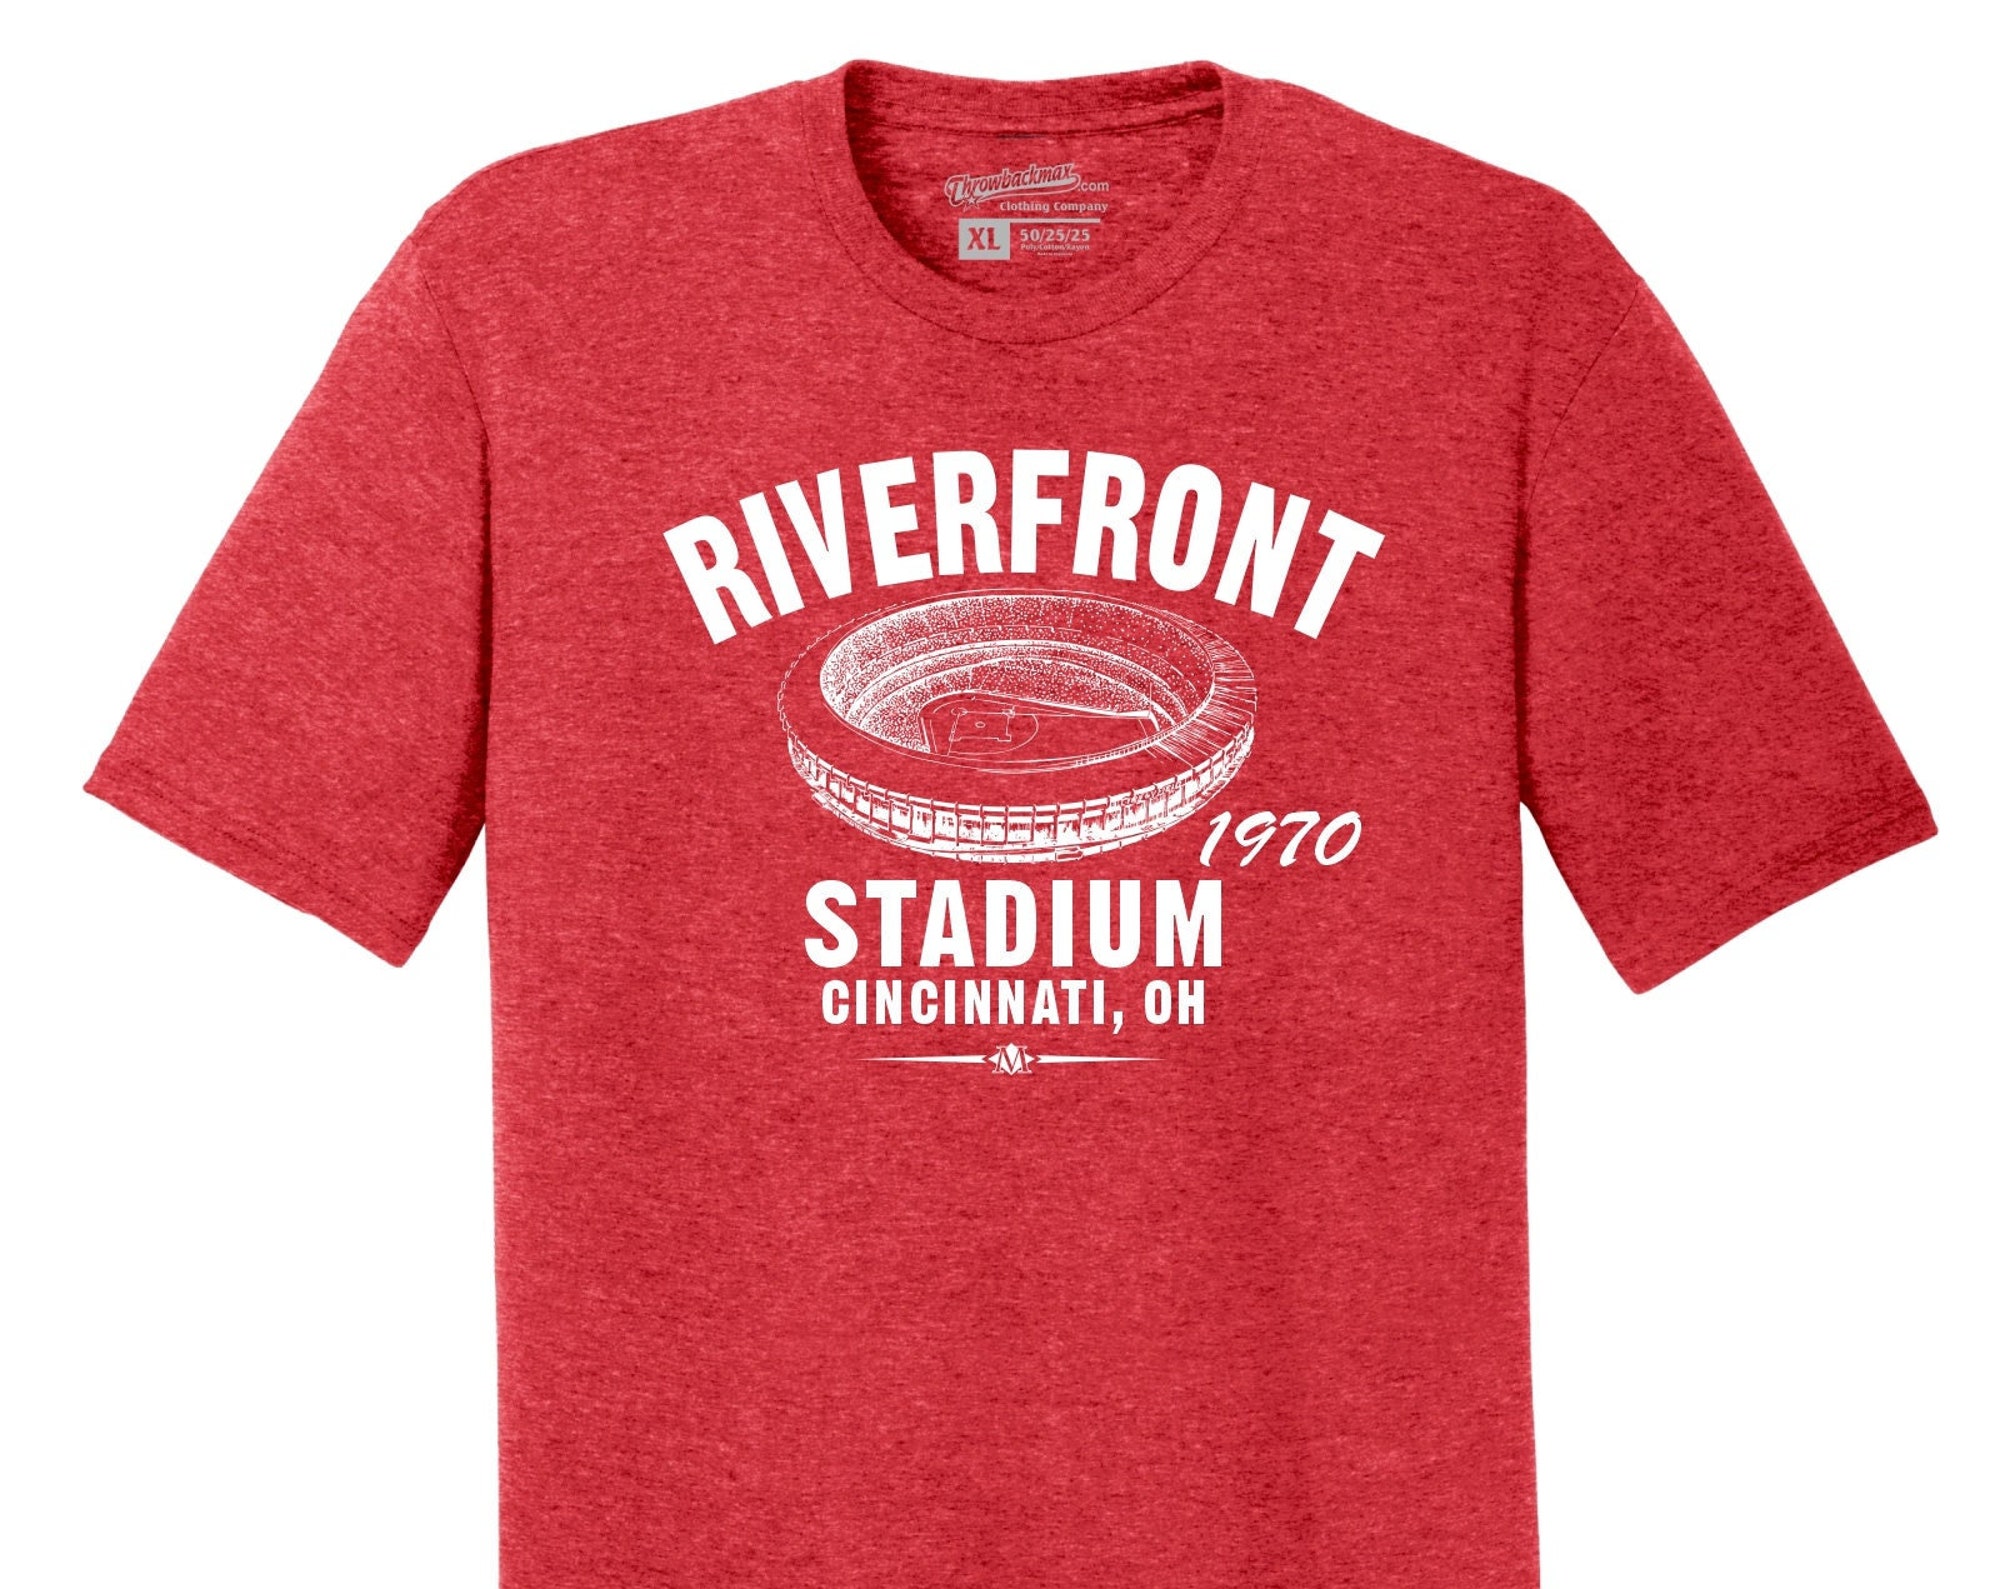 Riverfront Stadium 1970 Baseball Premium TRI-BLEND Tee Shirt